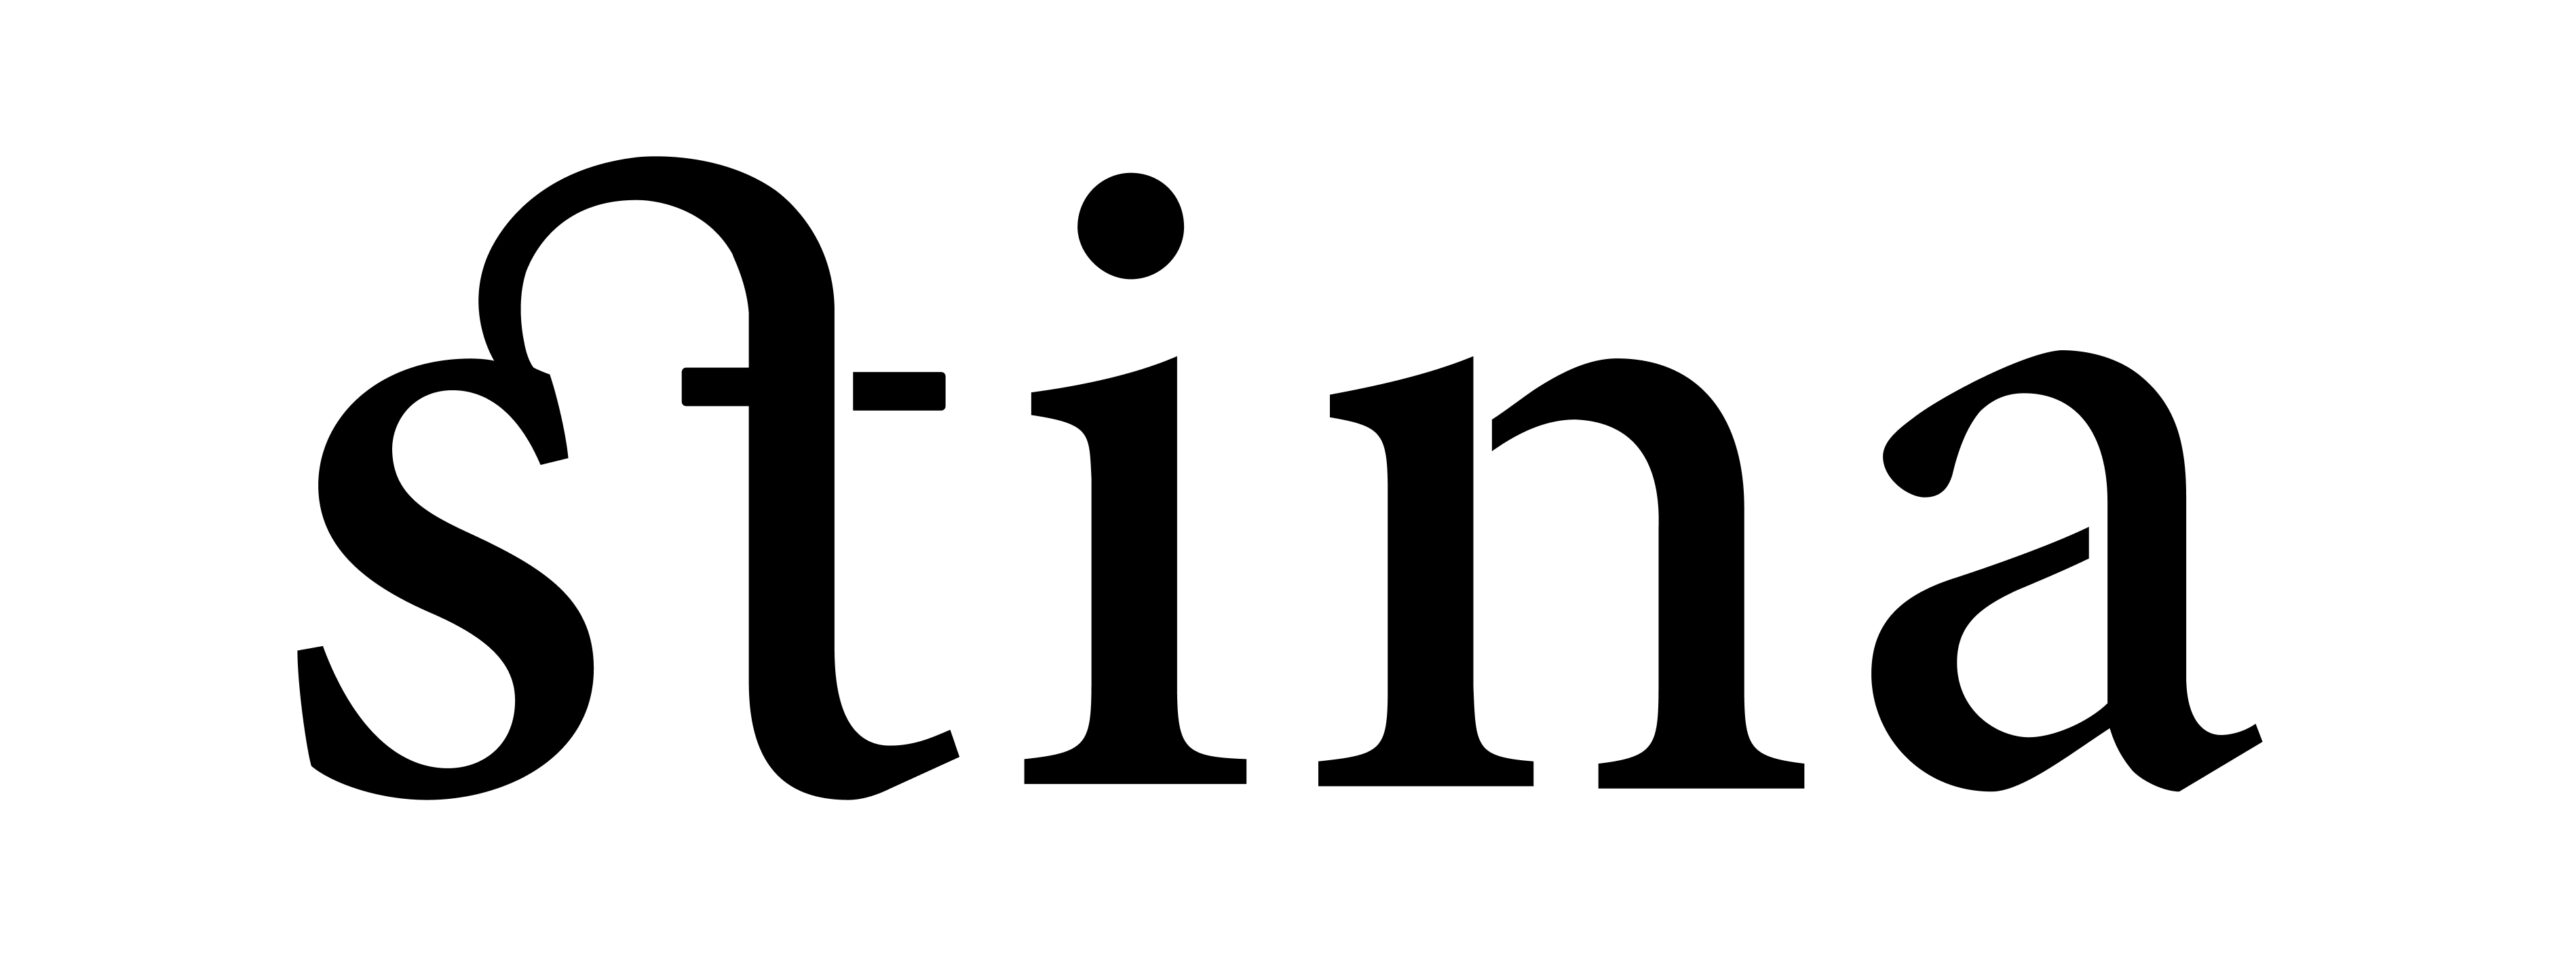 Stina Logo